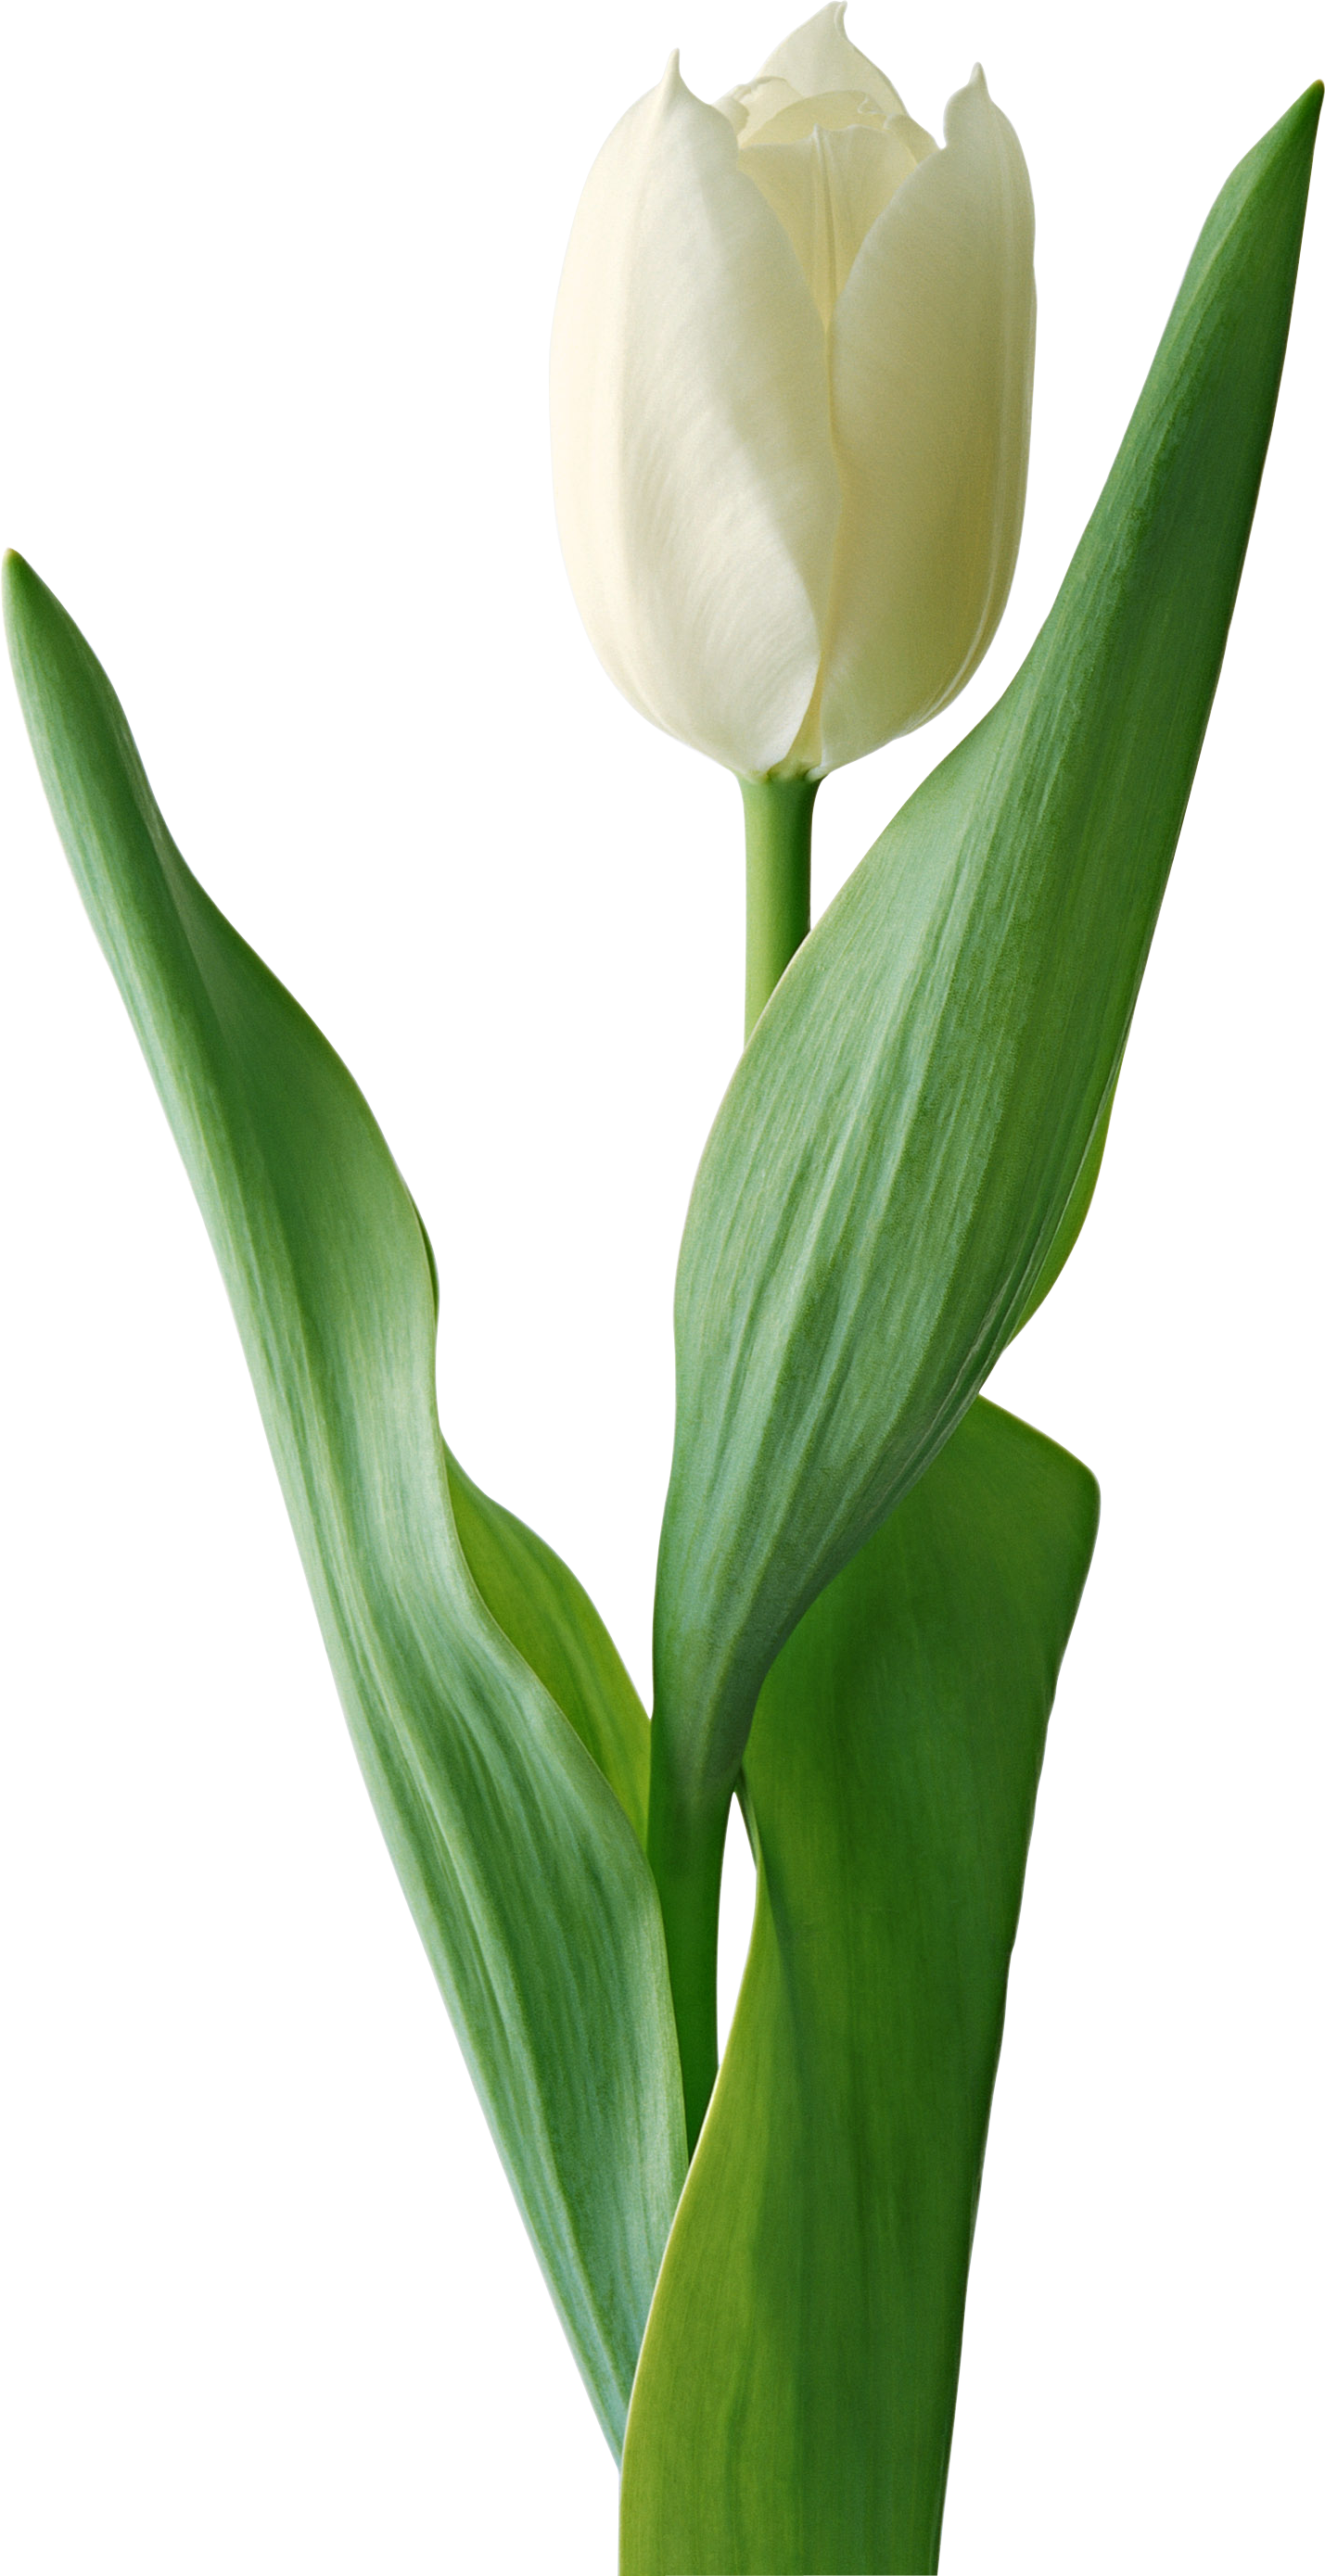 Hoa tulip trắng